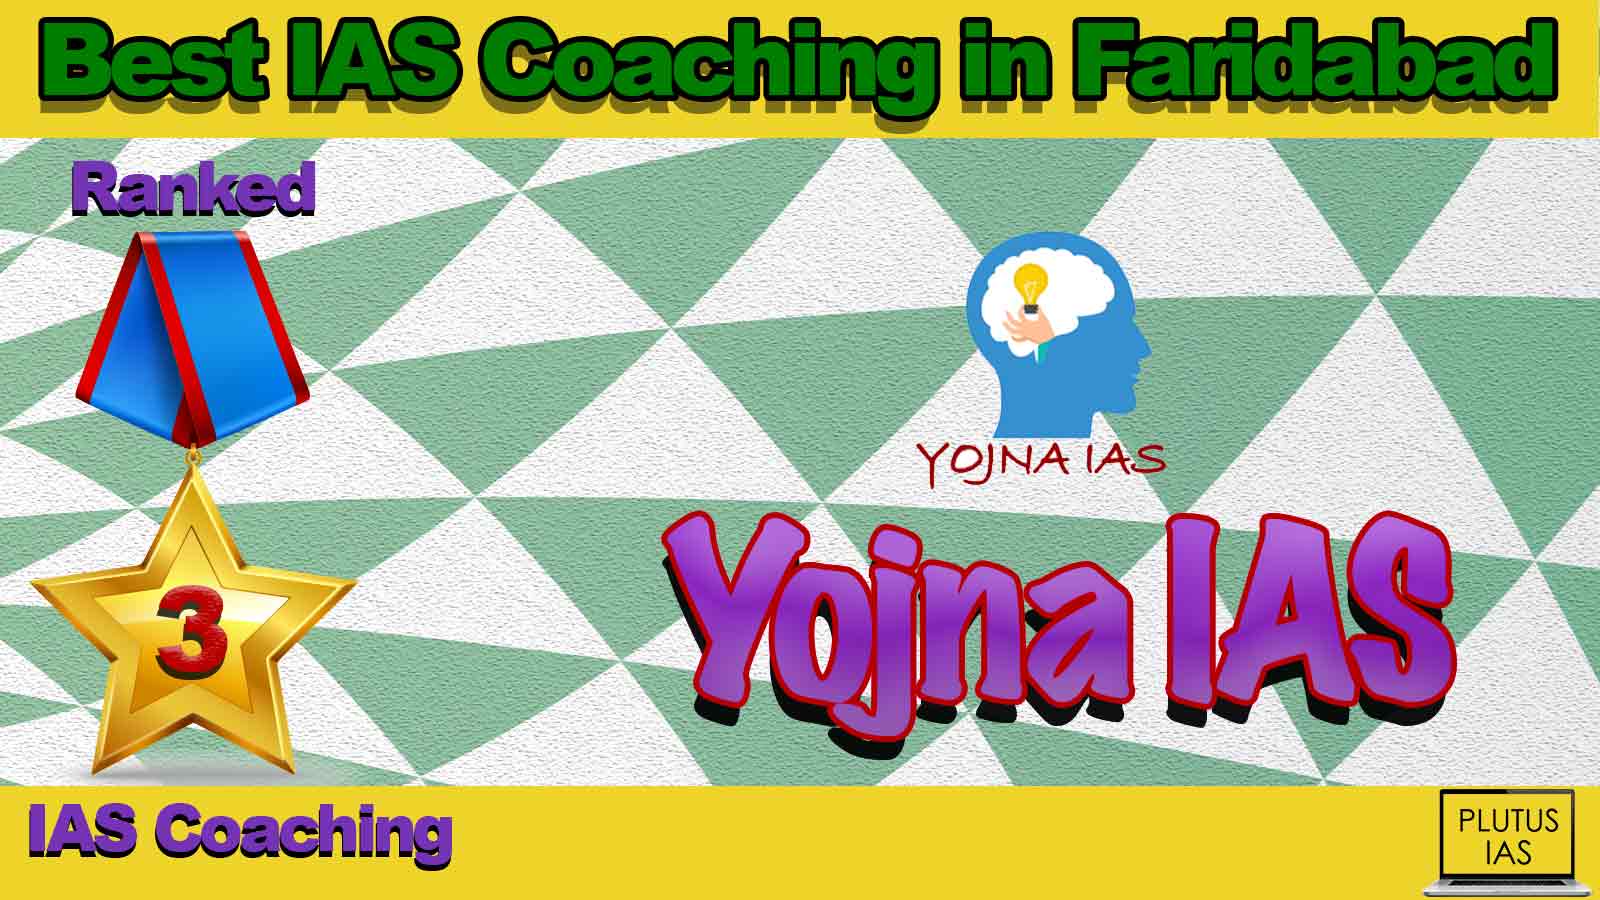 Best IAS Coaching in Faridabad